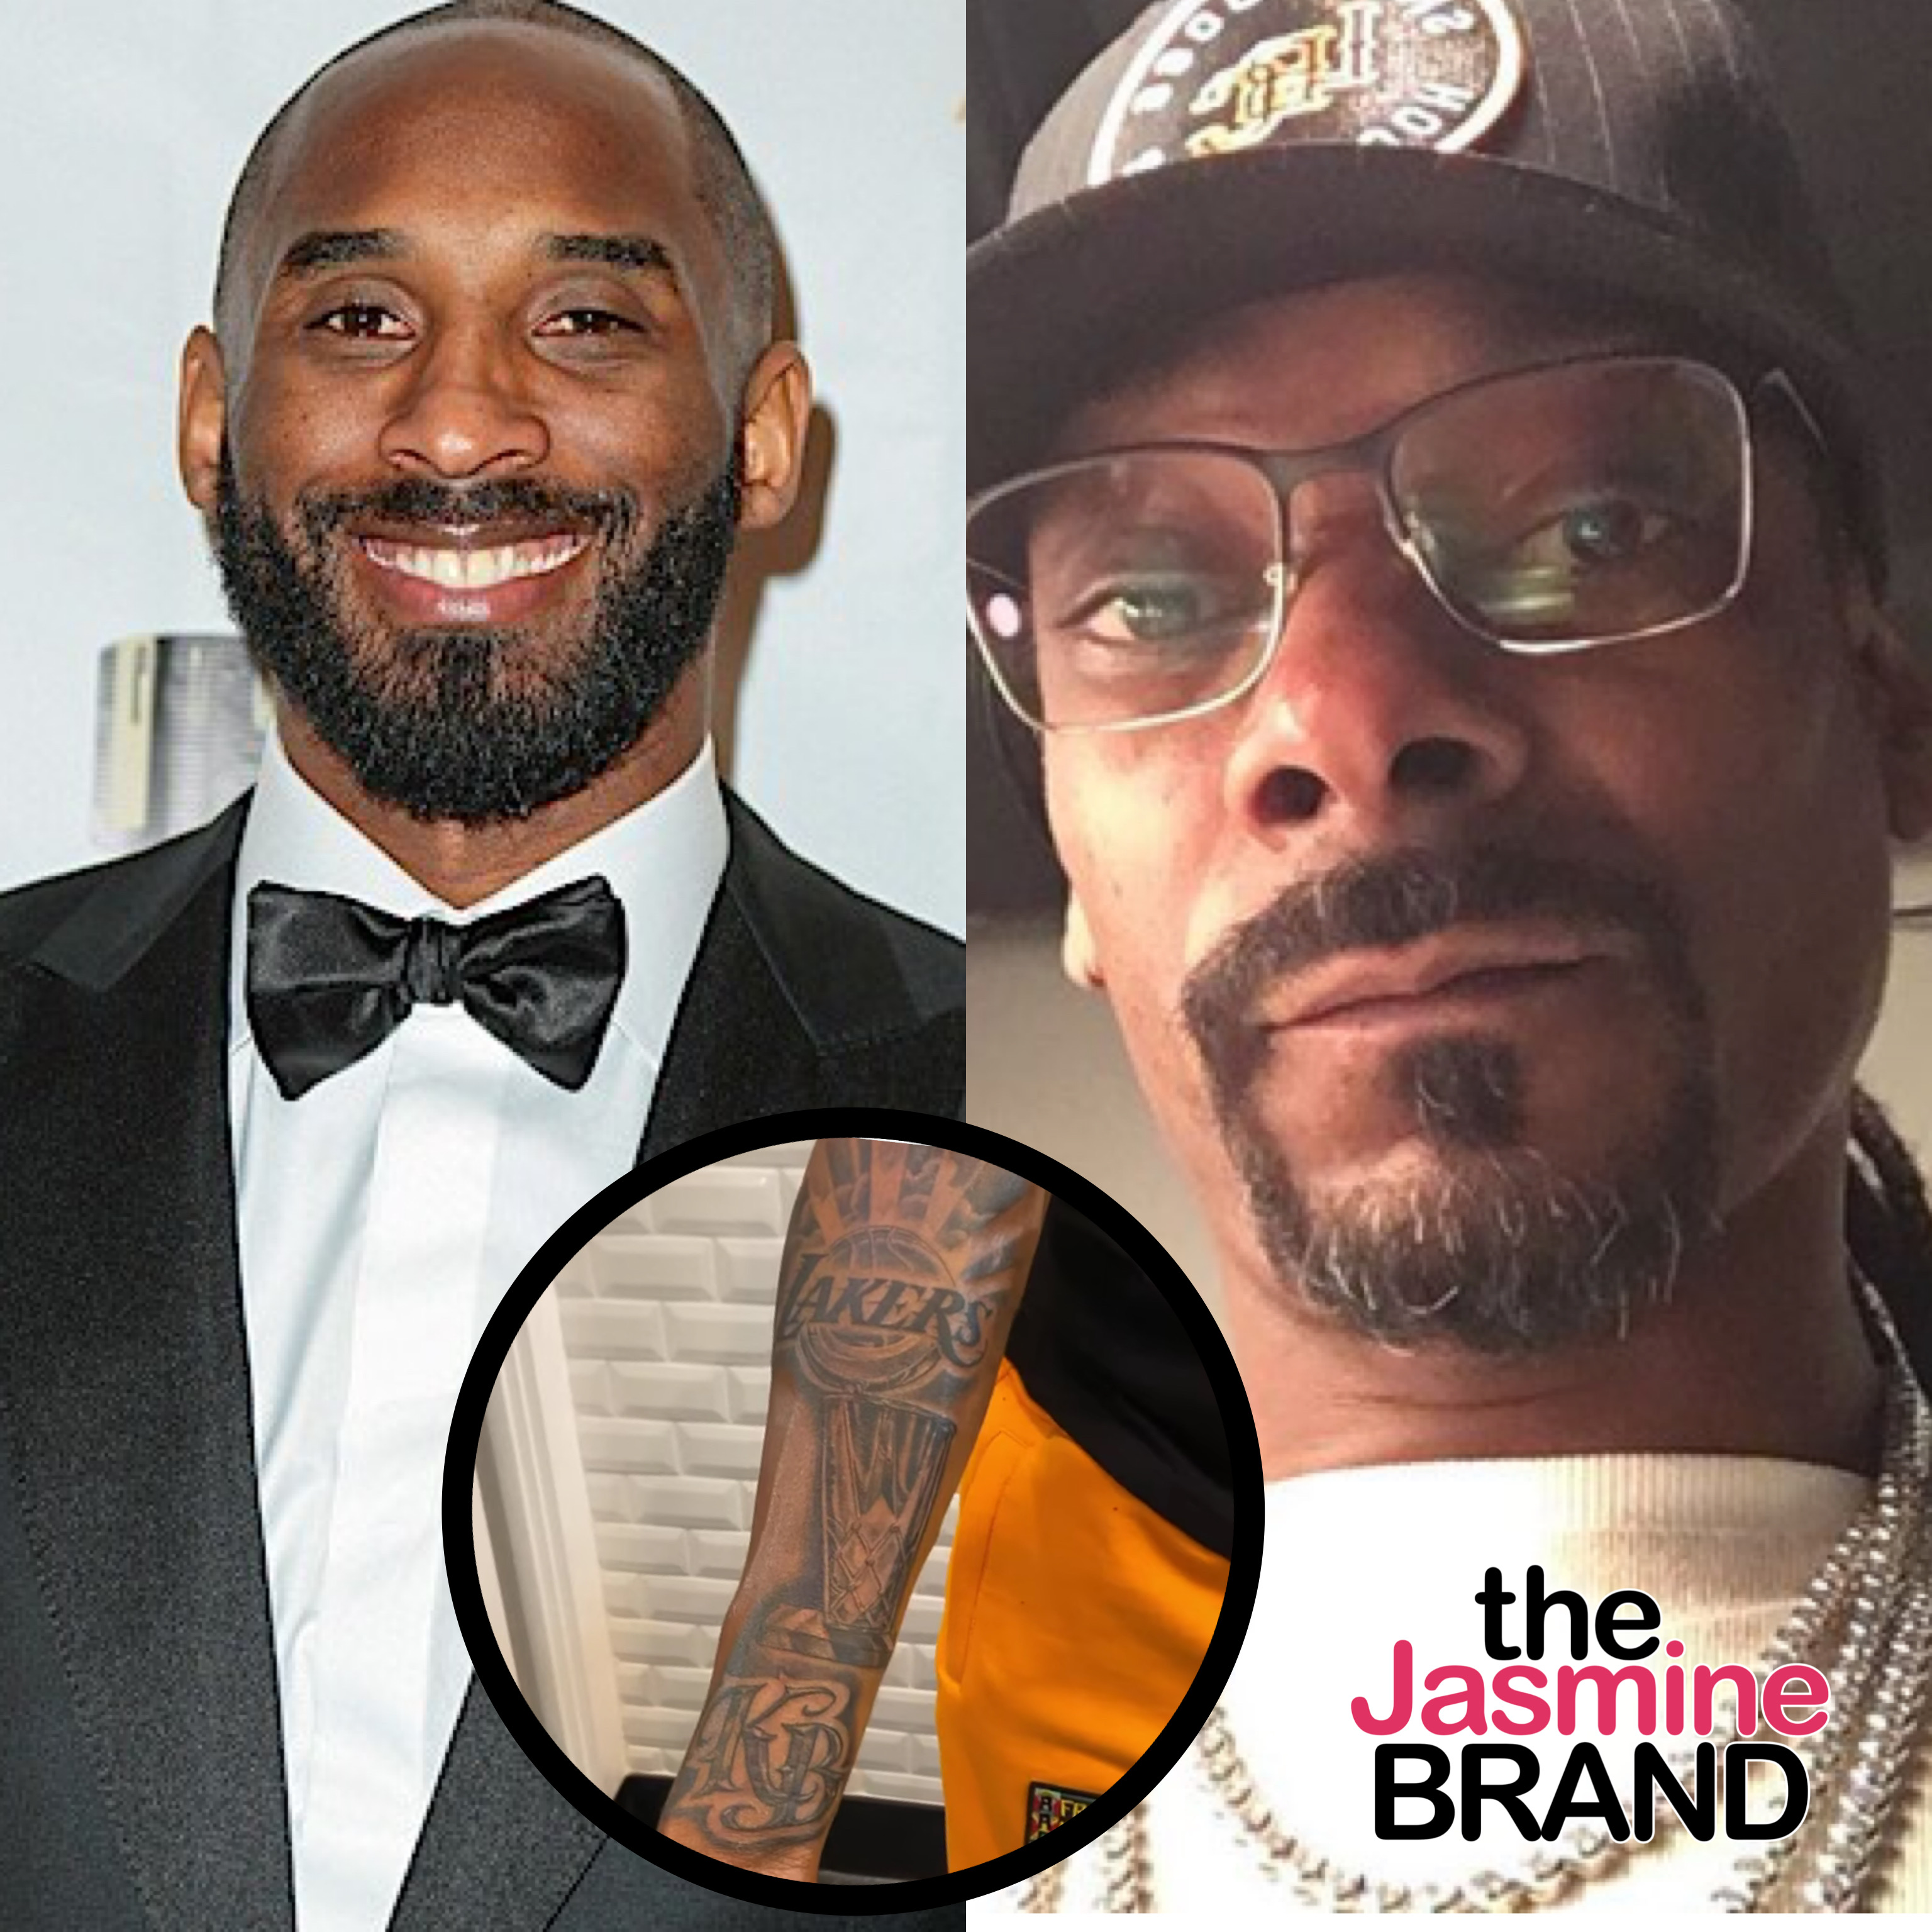 Snoop Dogg Shows Off New Lakers Tattoo With Kobe Bryants Initials   theJasmineBRAND